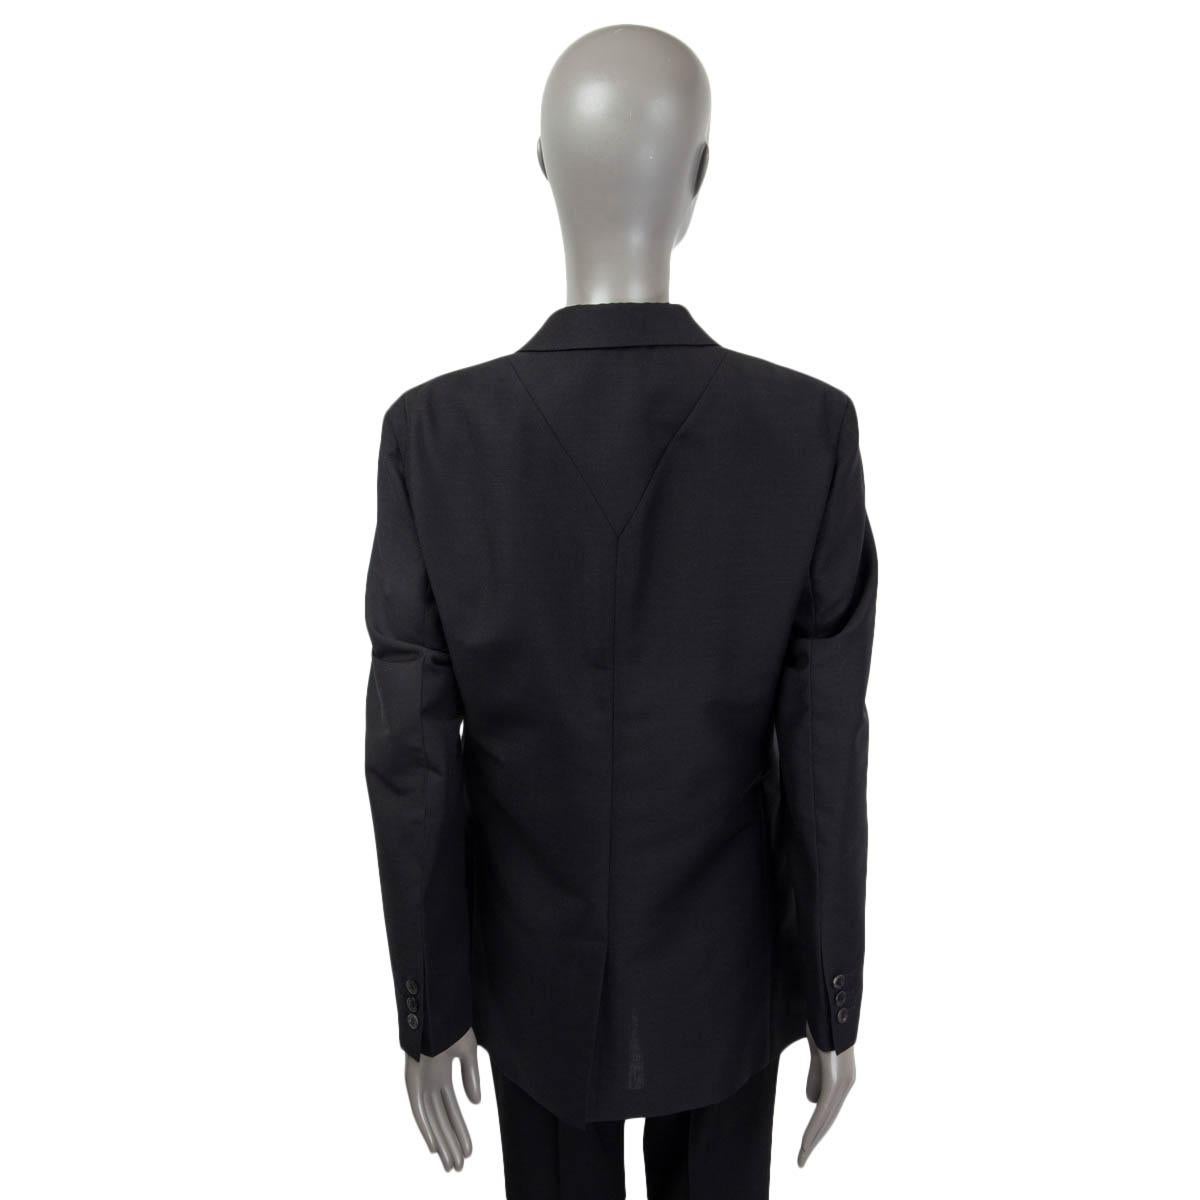 Black PRADA charcoal grey 2019 SUMMER KID MOHAIR OVERSIZED Blazer Jacket 42 M For Sale